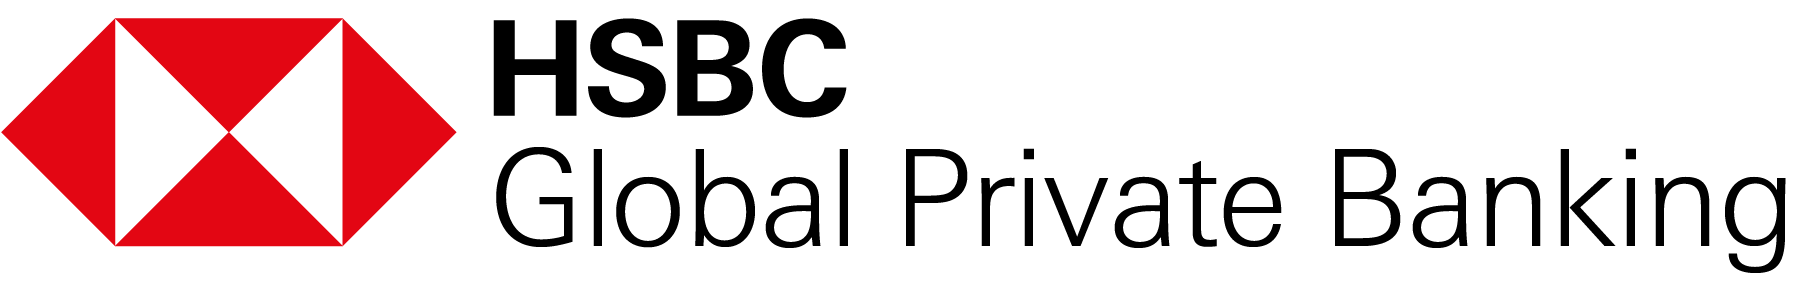 HSBC Global Private Banking logo